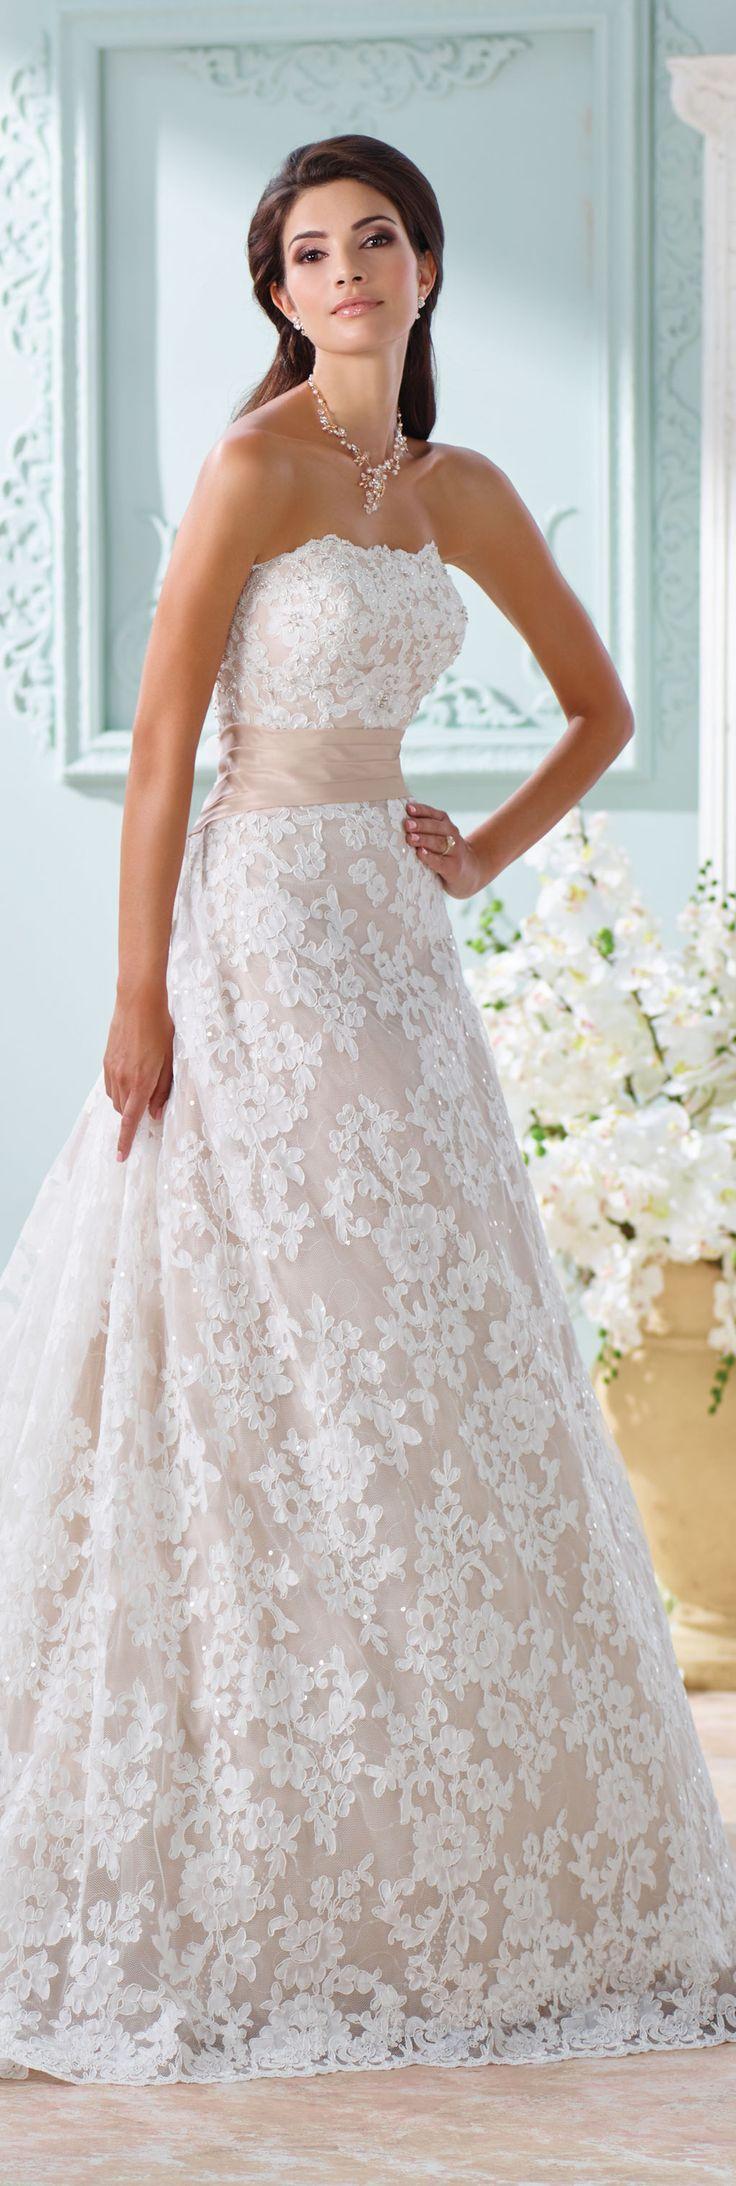 Wedding - Lace Aline Wedding Gown